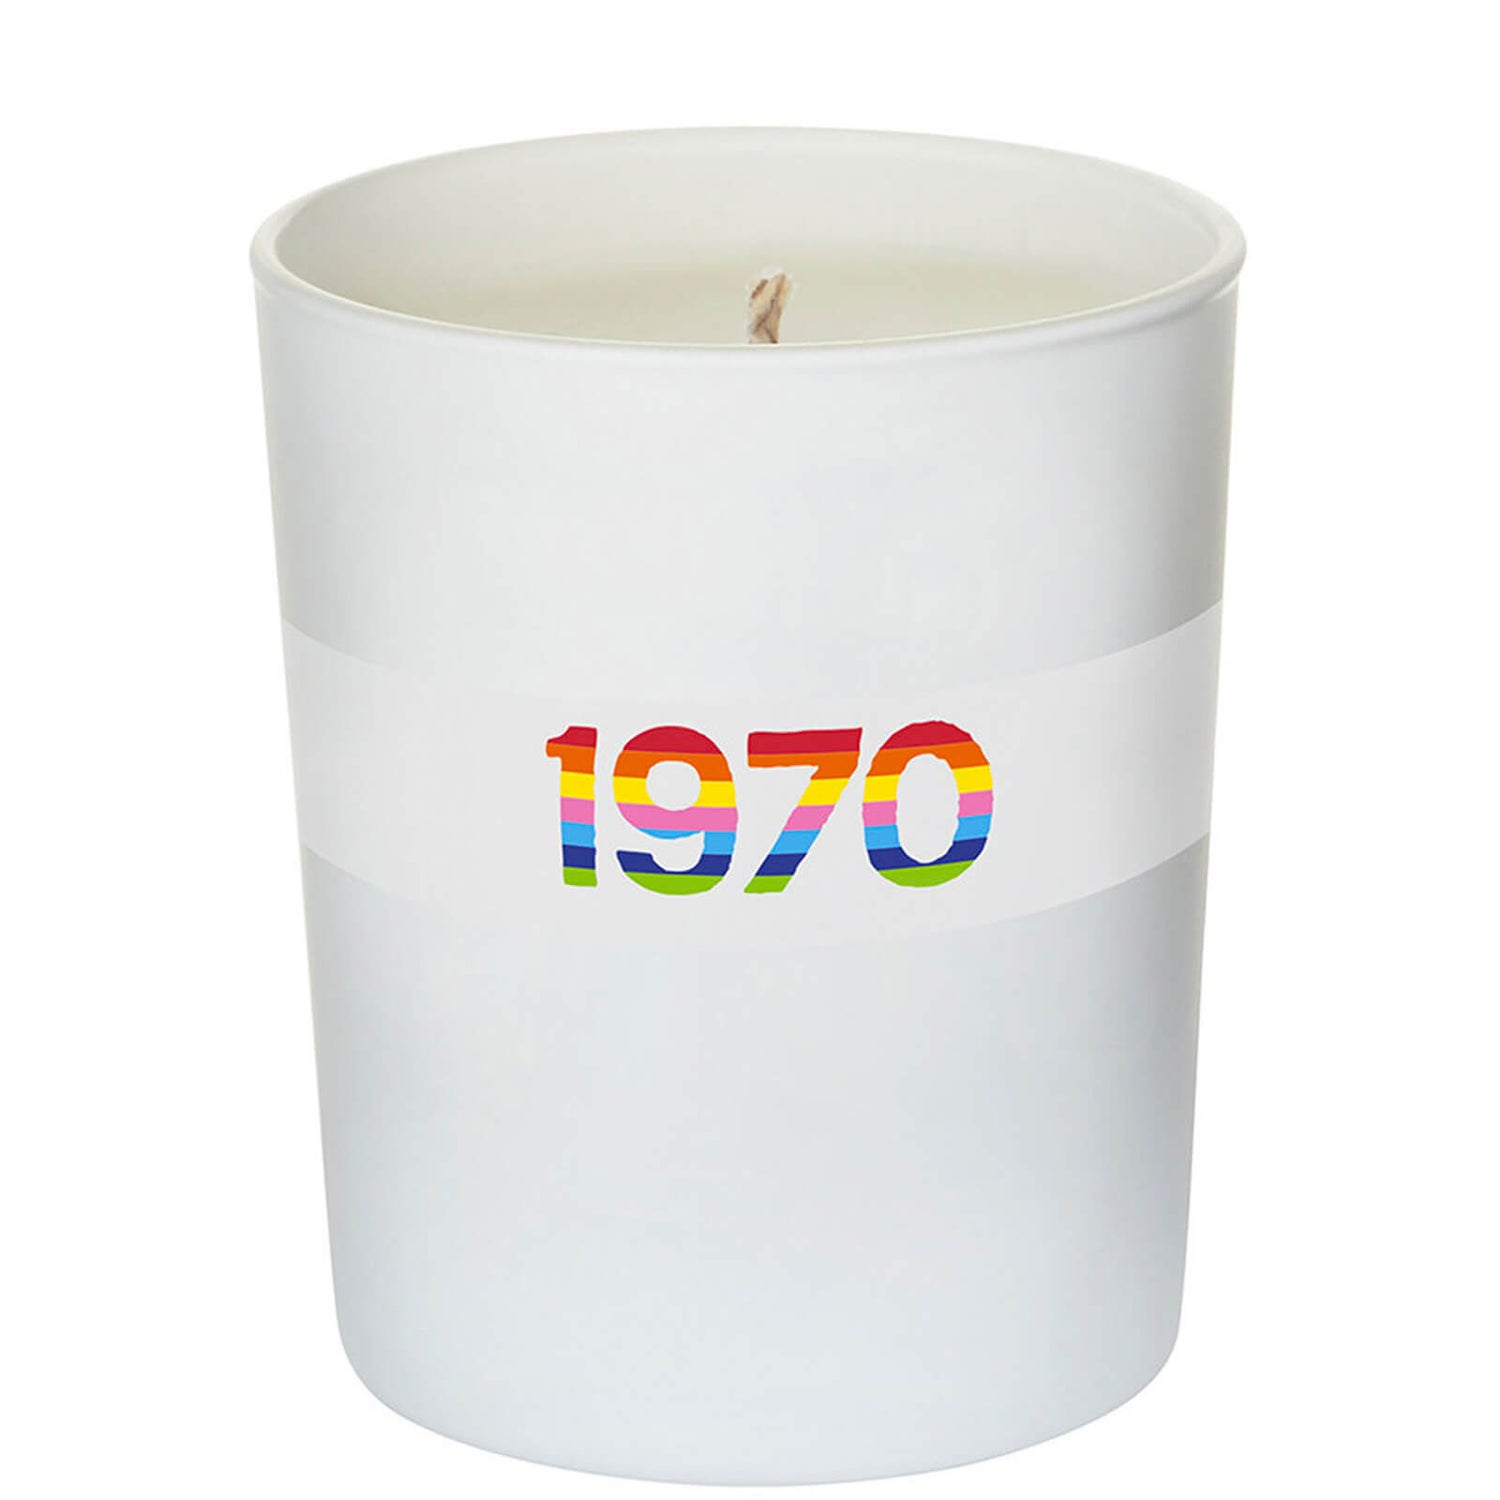 Bella Freud Limited Edition 1970 Rainbow Candle